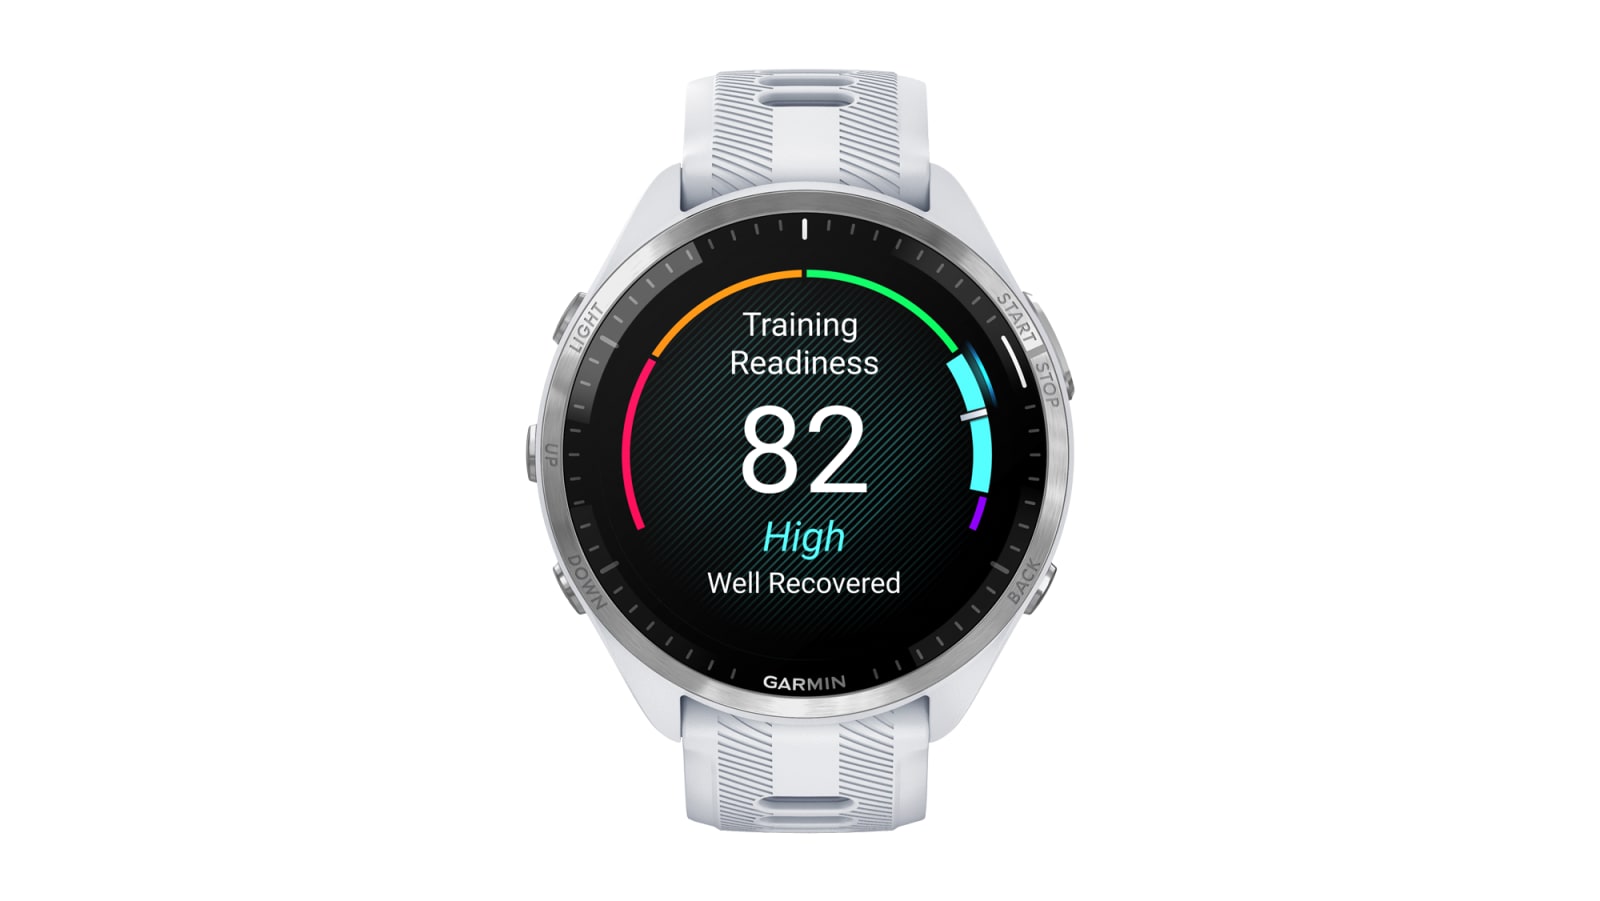  Garmin Forerunner 265 (Black/Powder Gray) Running GPS  Smartwatch, Colorful AMOLED Display, Training Metric, & Recovery Insights